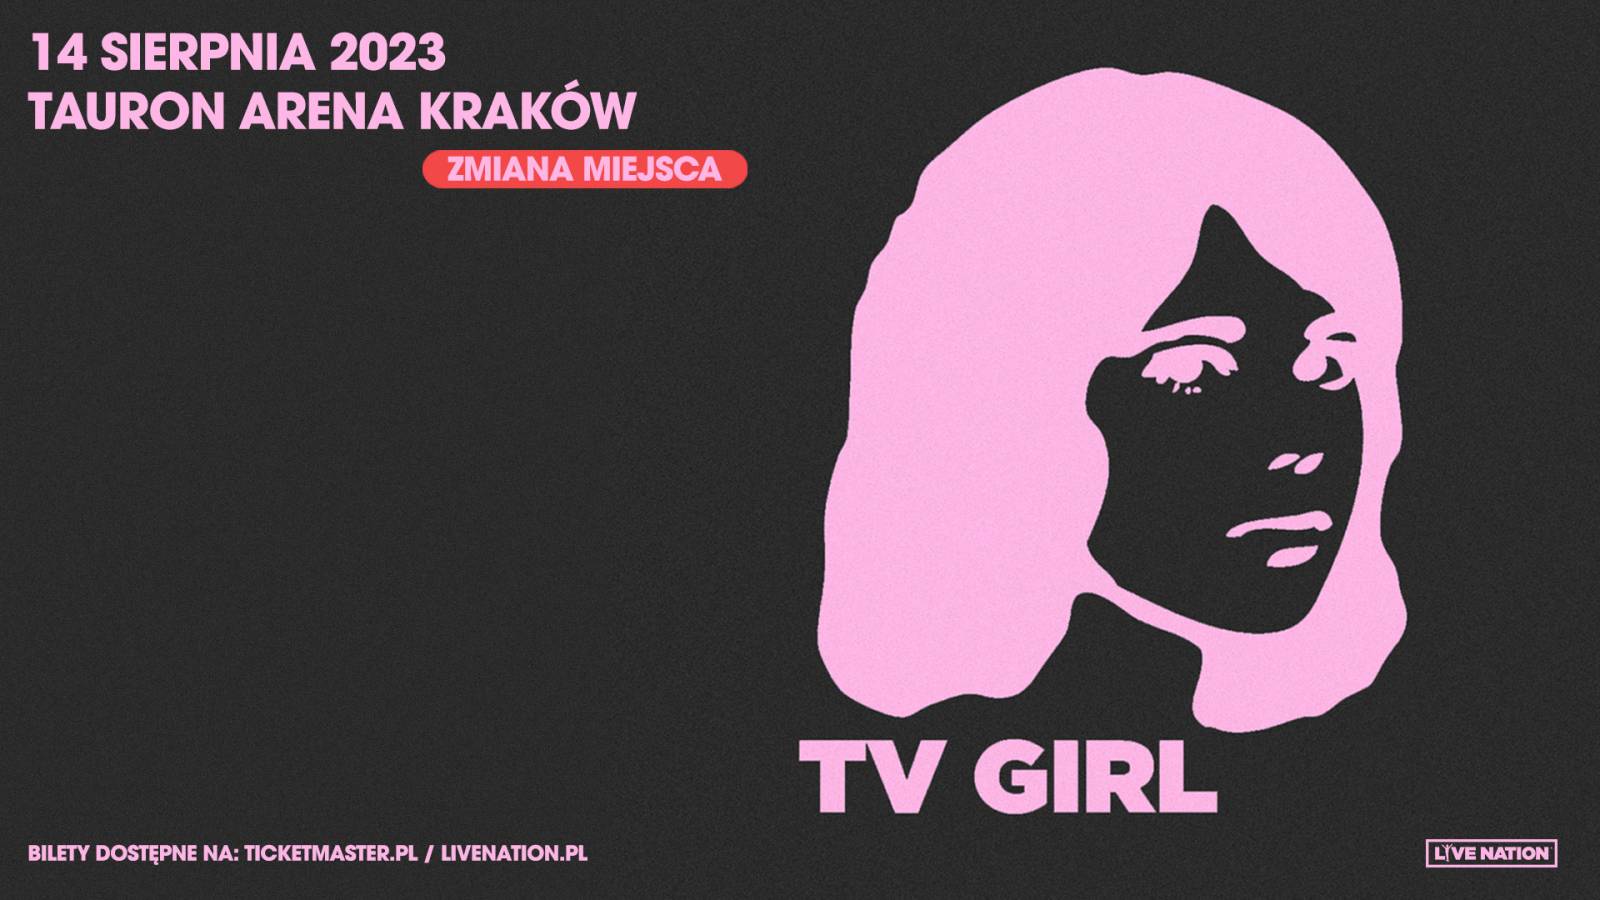 TV Girl at Tauron Arena Kraków